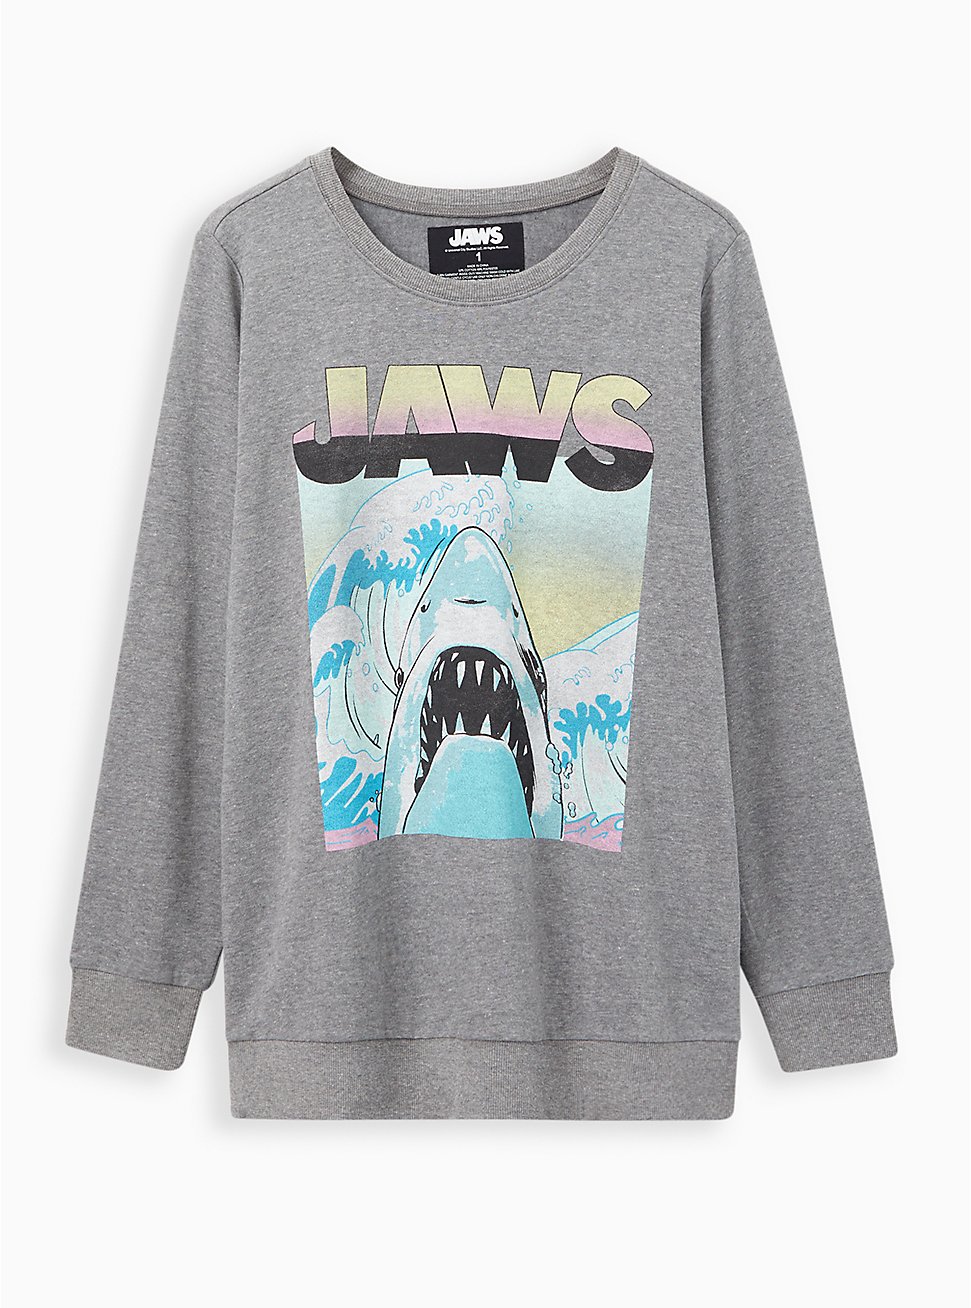 Sweatshirt - Cozy Fleece Jaws Grey, MEDIUM HEATHER GREY, hi-res